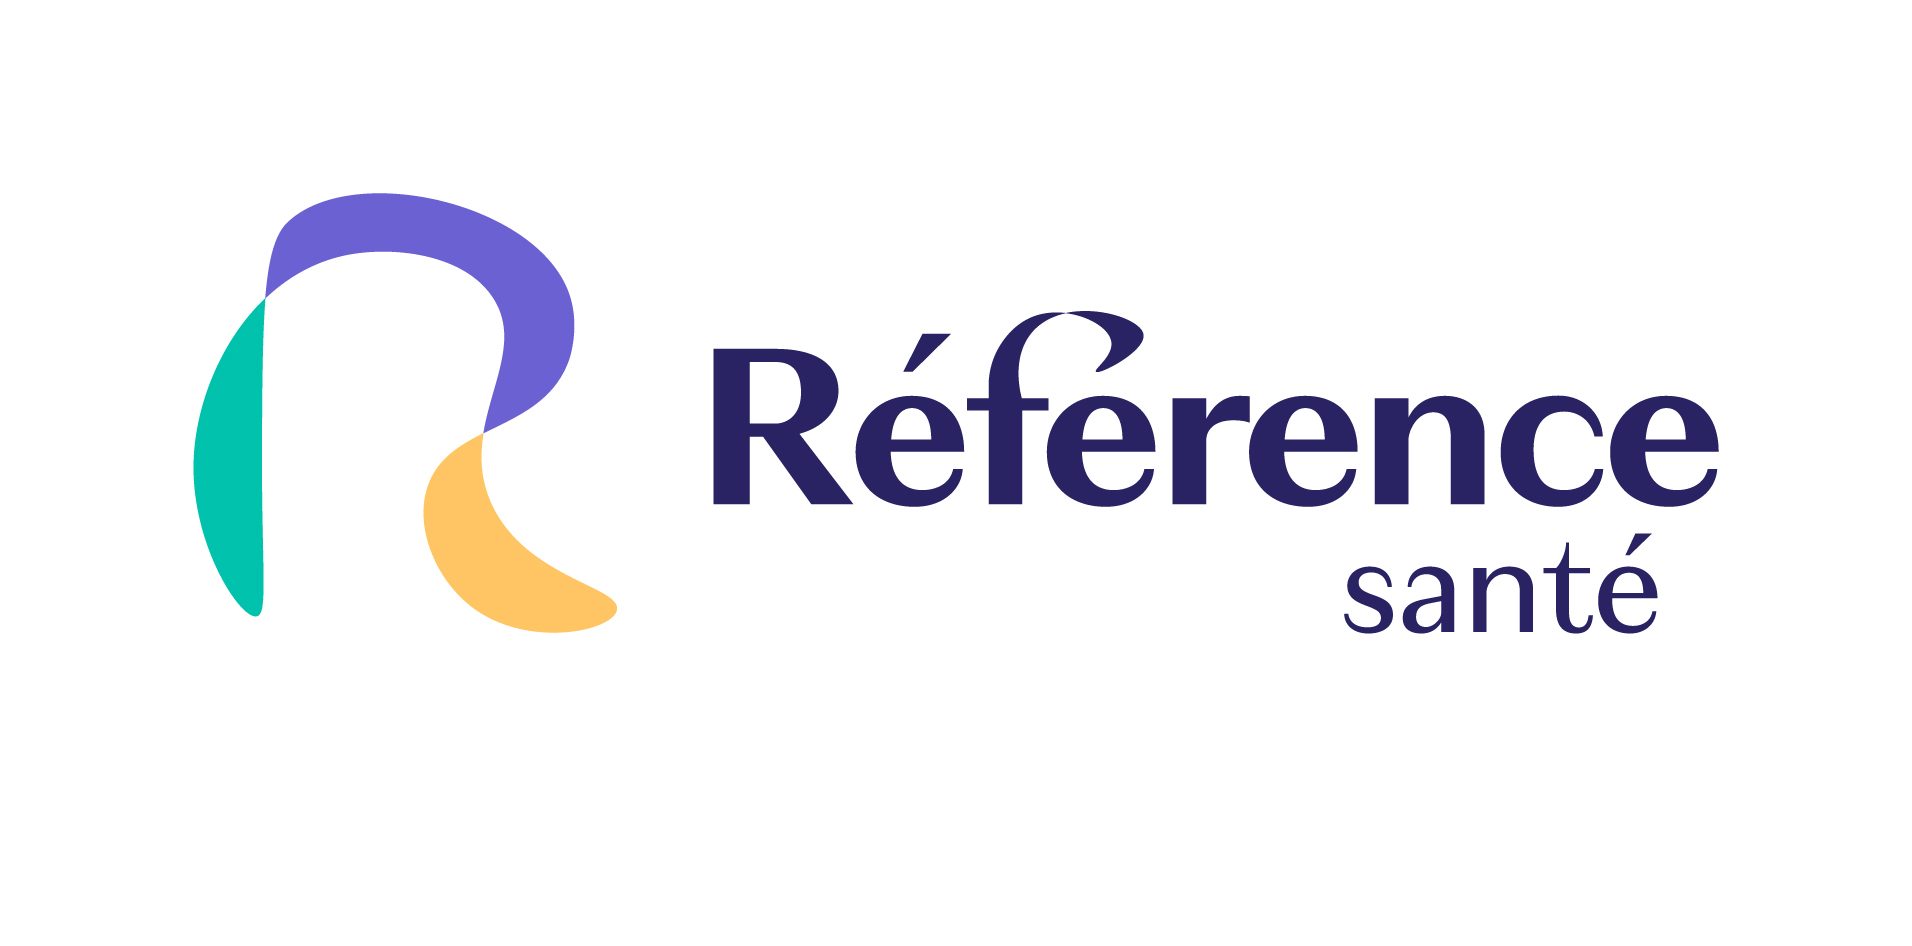 Reference-sante-logo